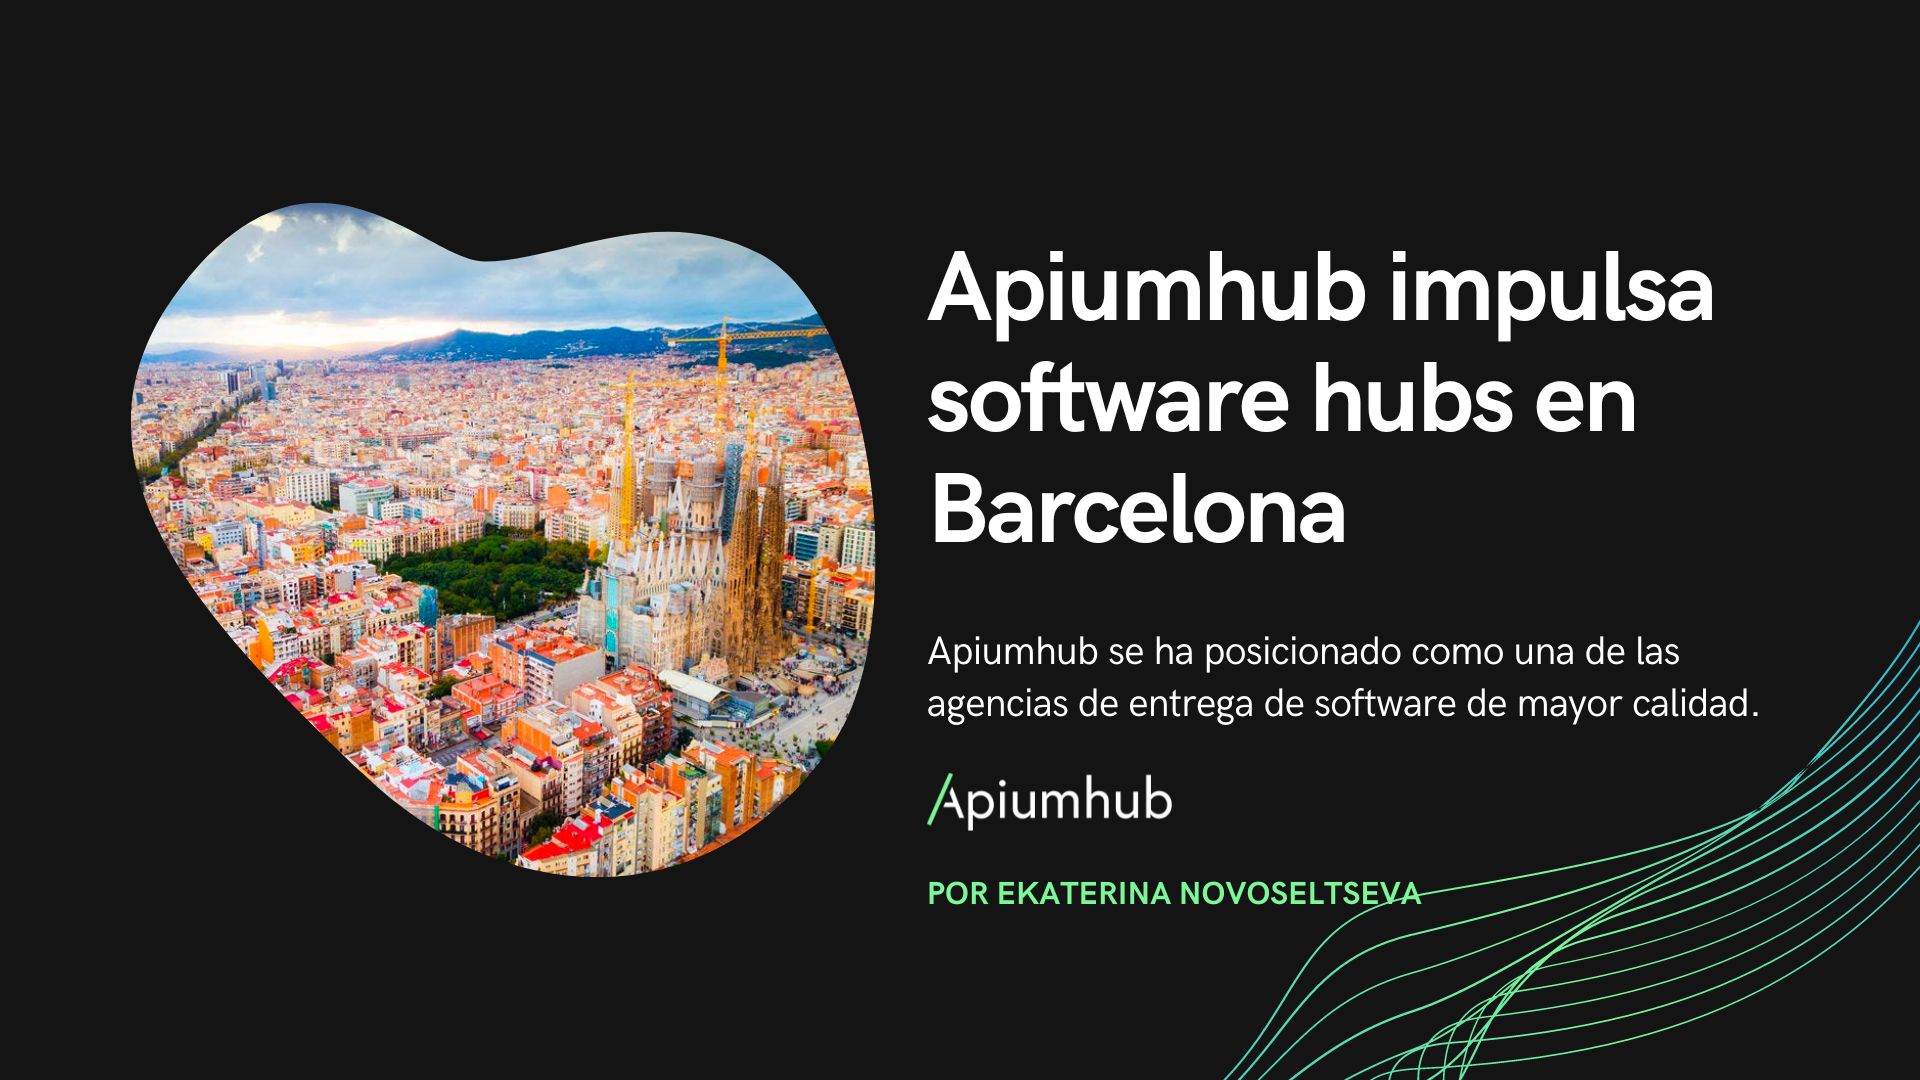 Apiumhub impulsa software hubs en Barcelona